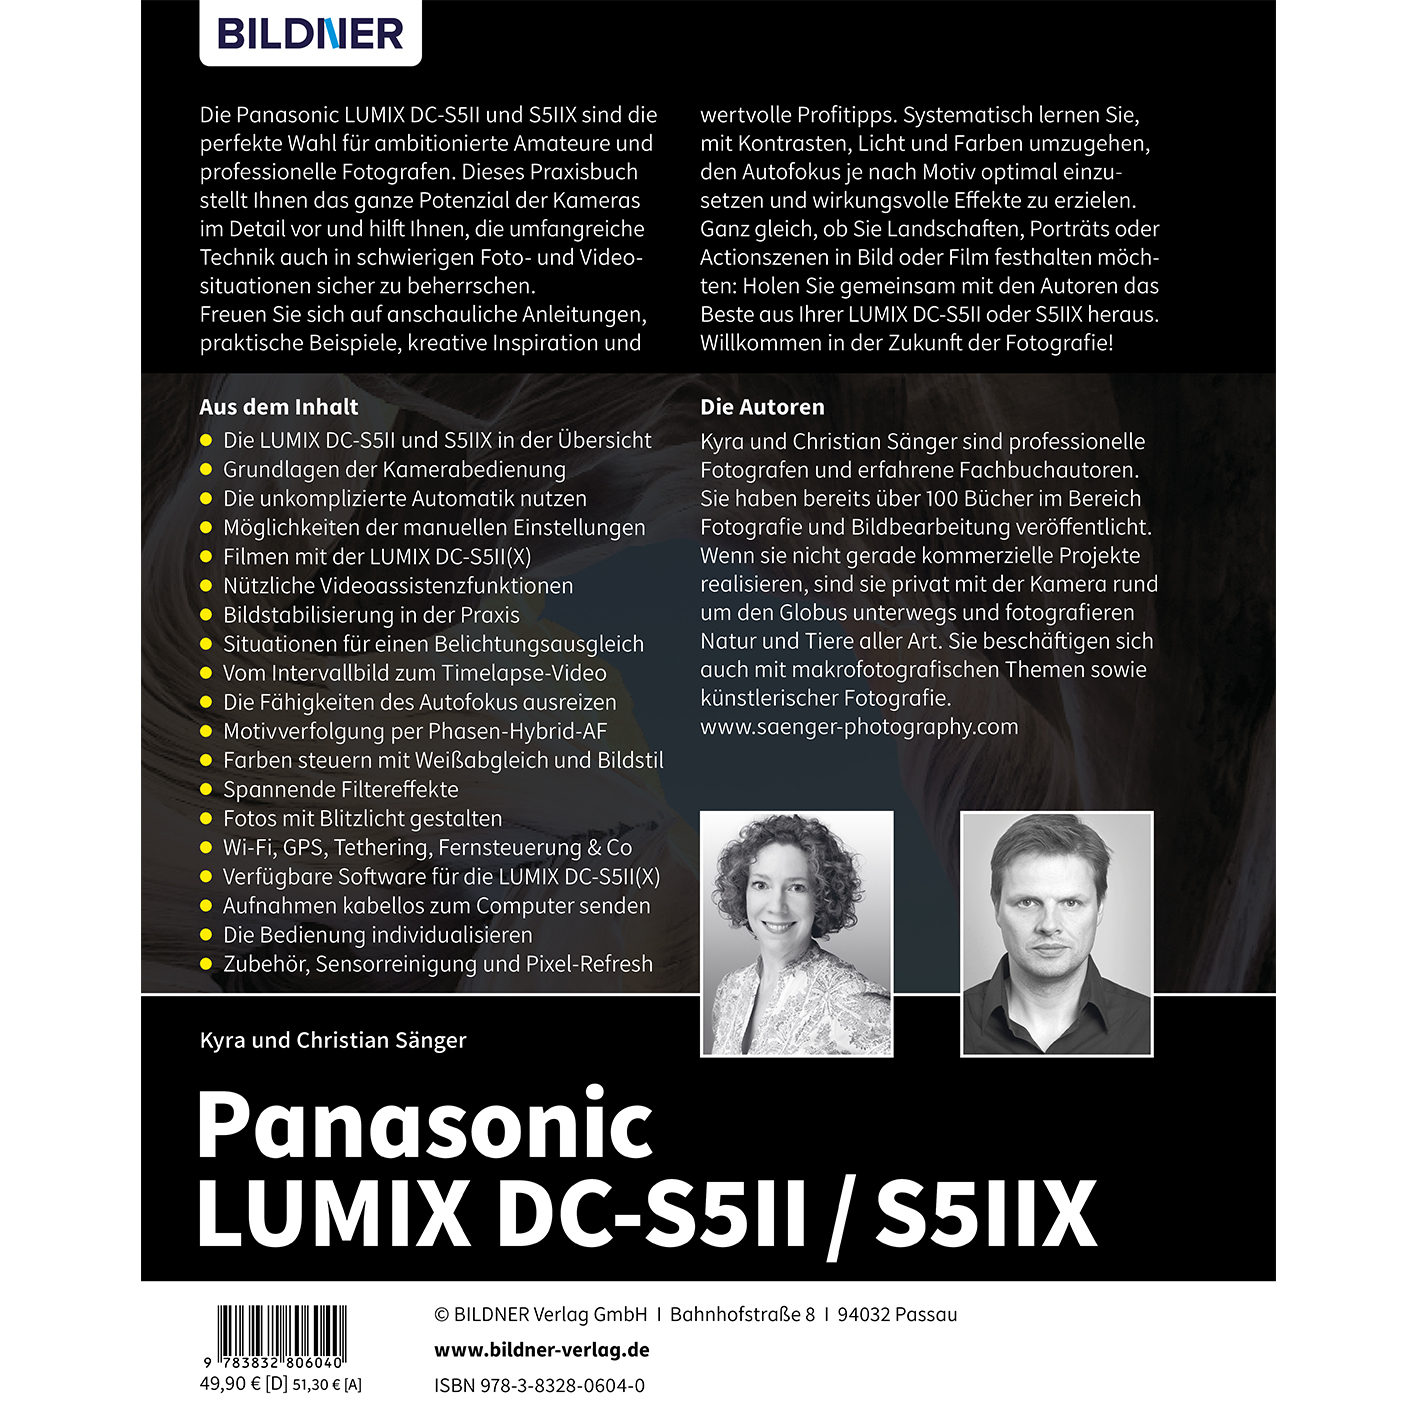 Panasonic LUMIX DC-S5II S5II X - Das Praxisbuch Ihrer Kamera umfangreiche zu 